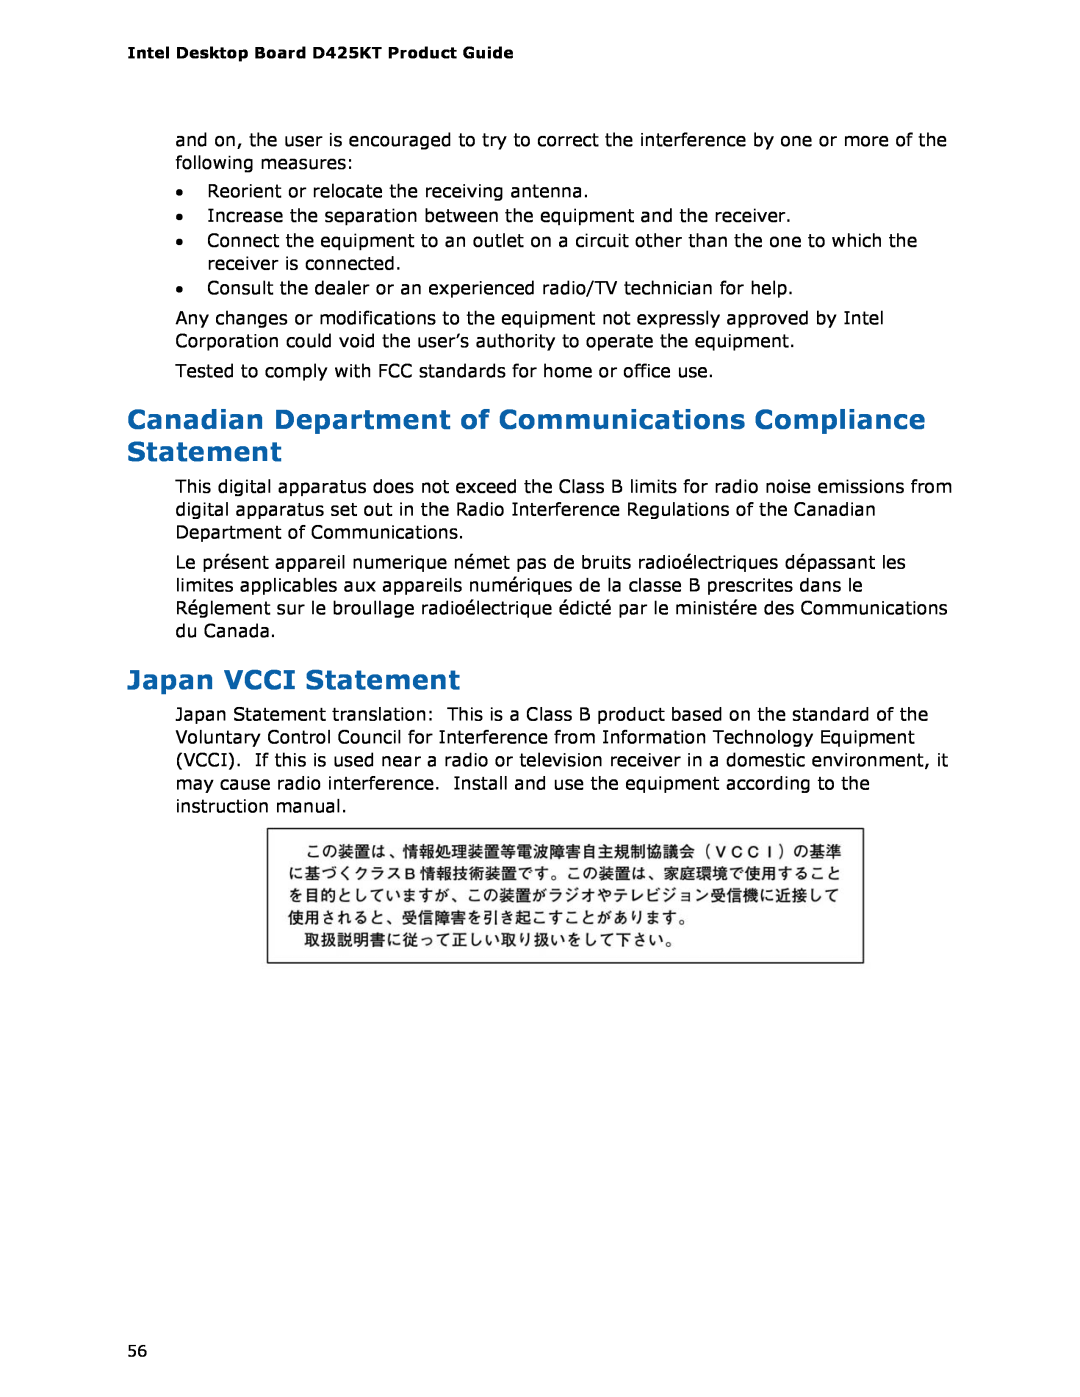 Intel D425KT manual Canadian Department of Communications Compliance Statement, Japan VCCI Statement 